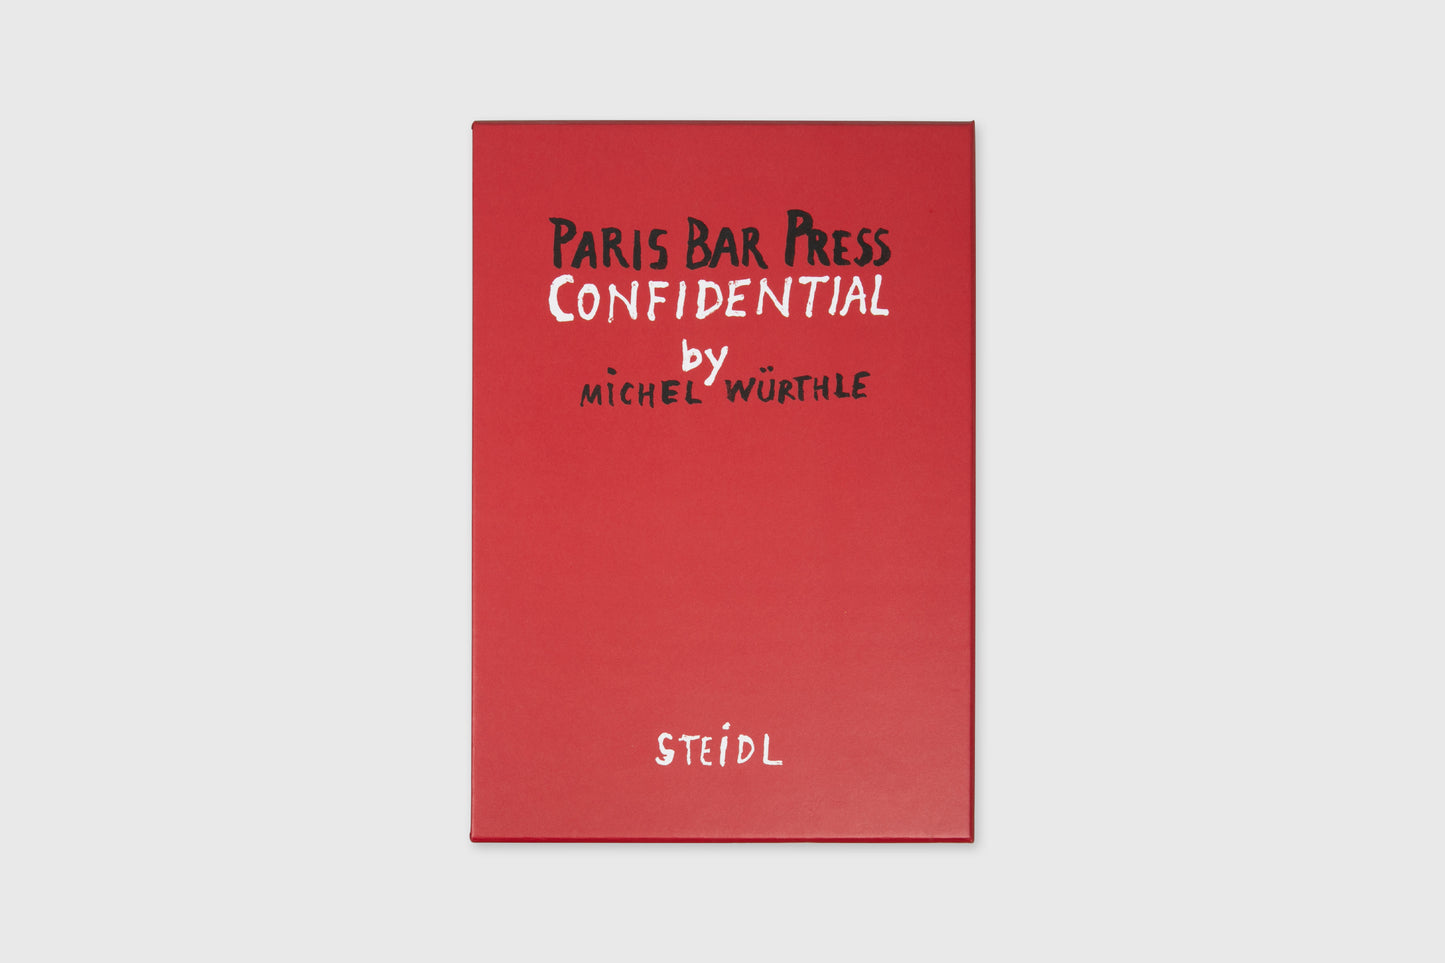 Paris Bar Press: Confidential